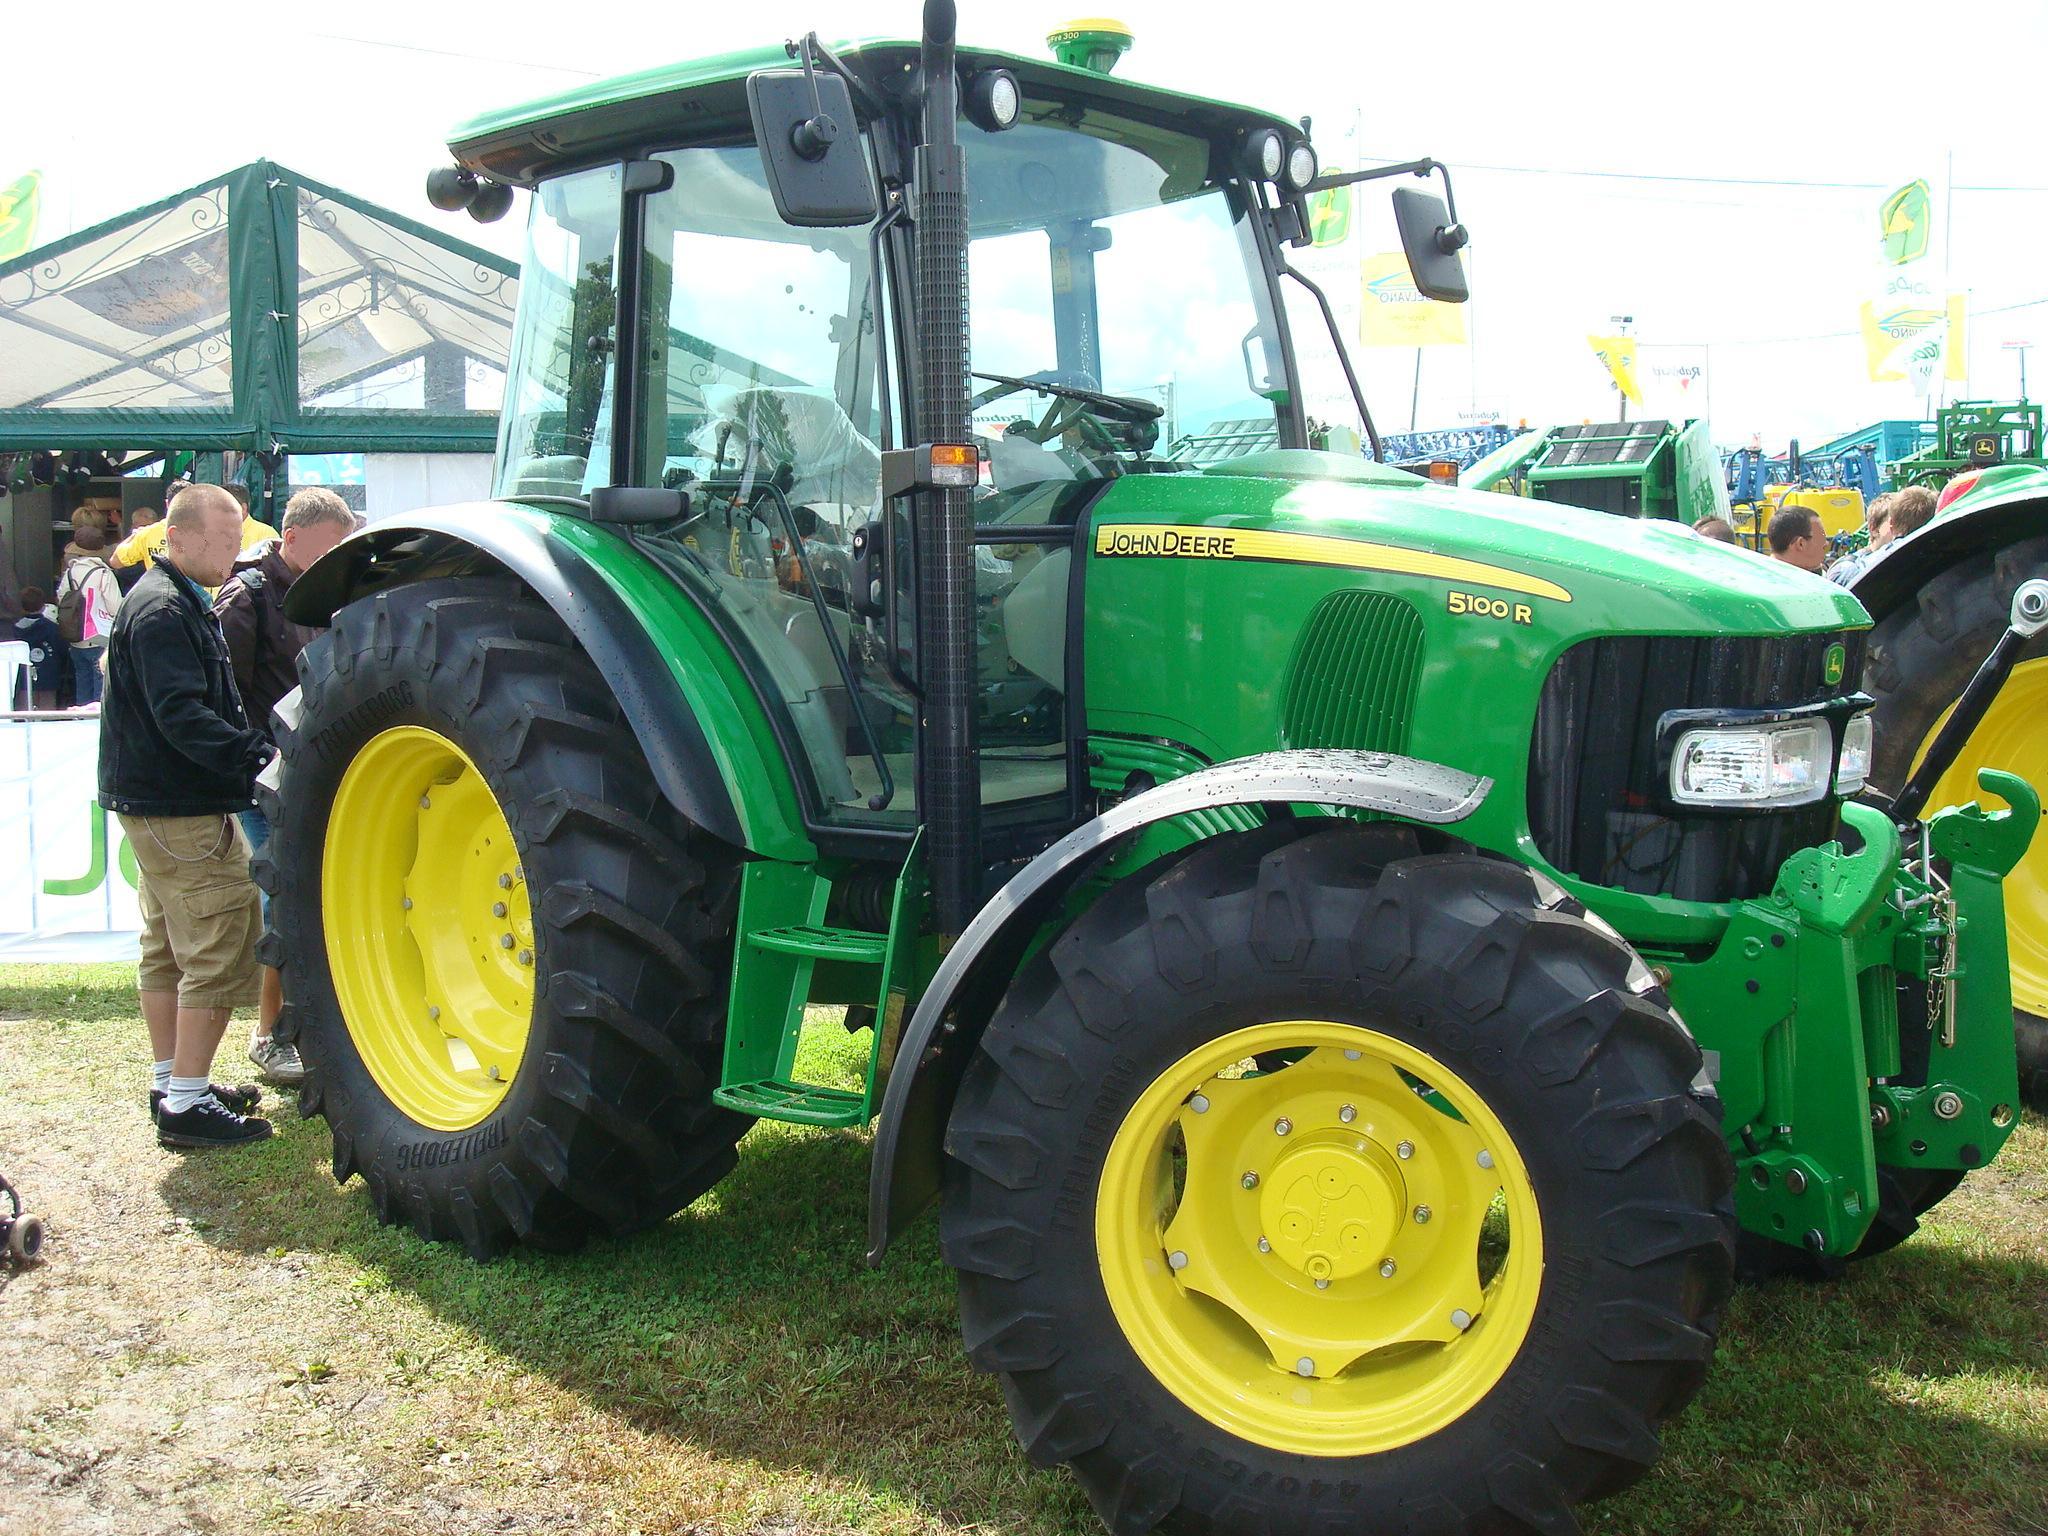 File:Traktor John Deere 5100R.JPG - Wikimedia Commons